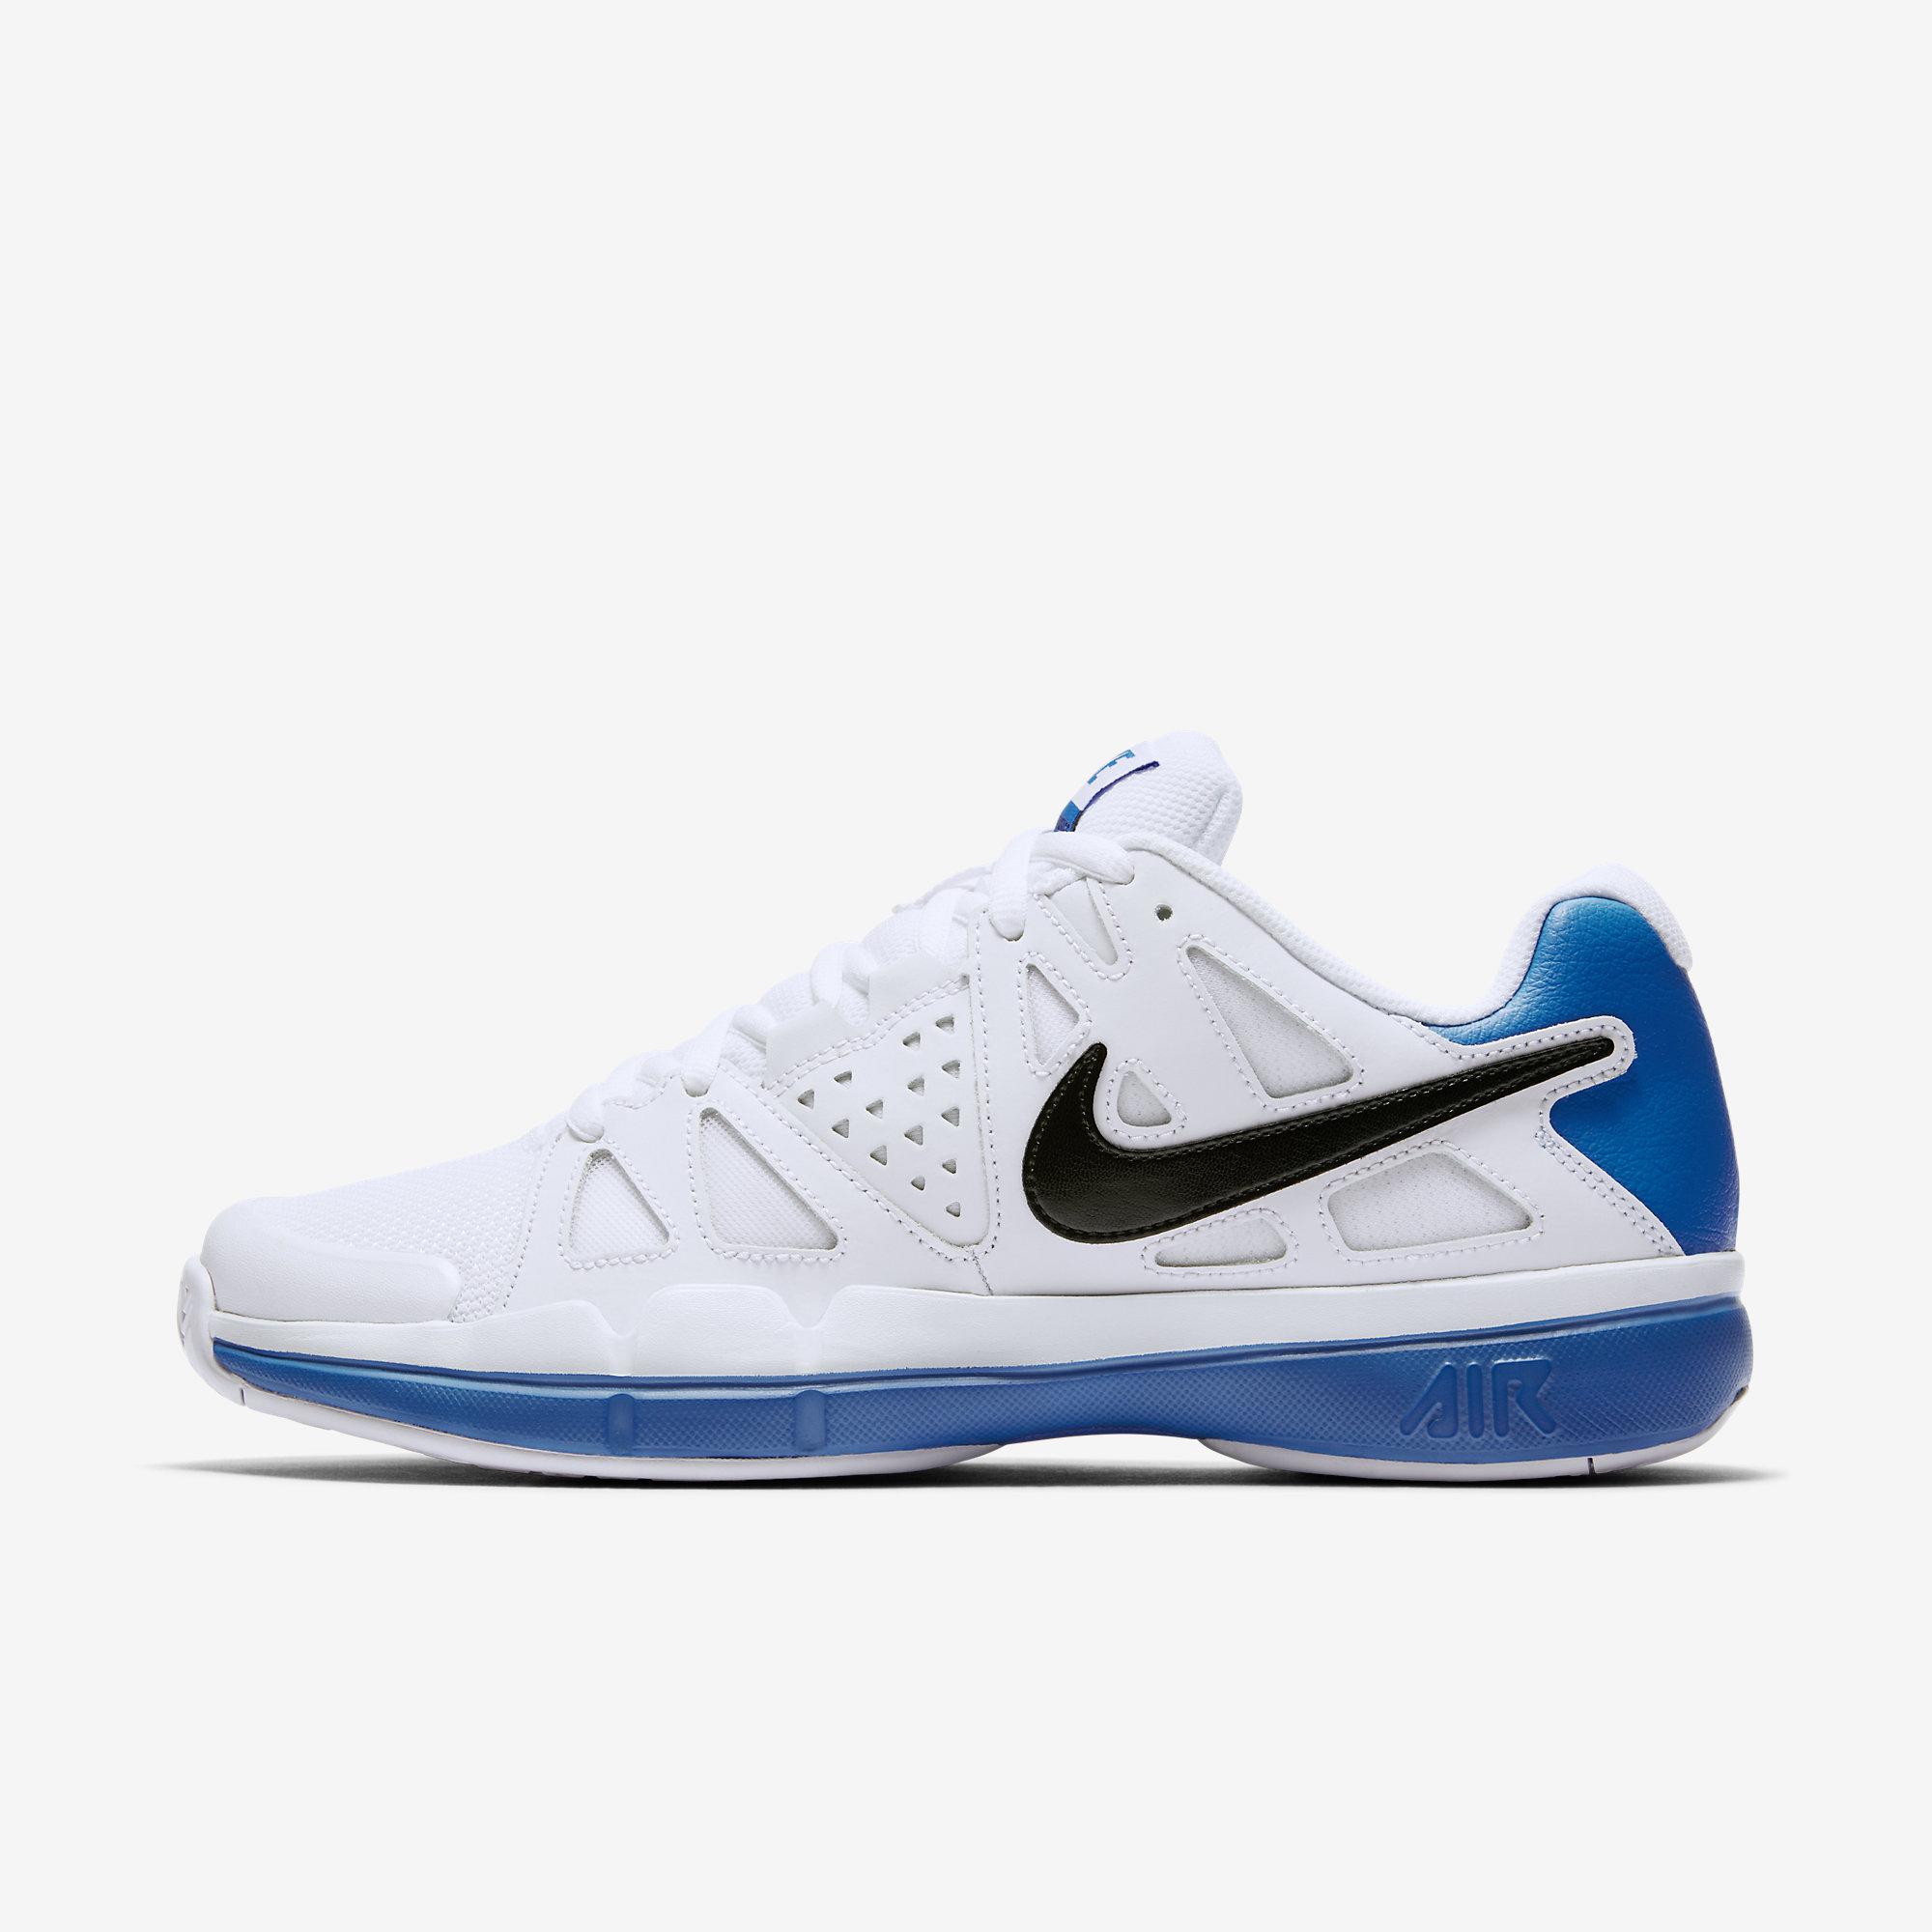 Nike Mens Air Vapor Advantage Tennis Shoes - White/Blue - Tennisnuts.com